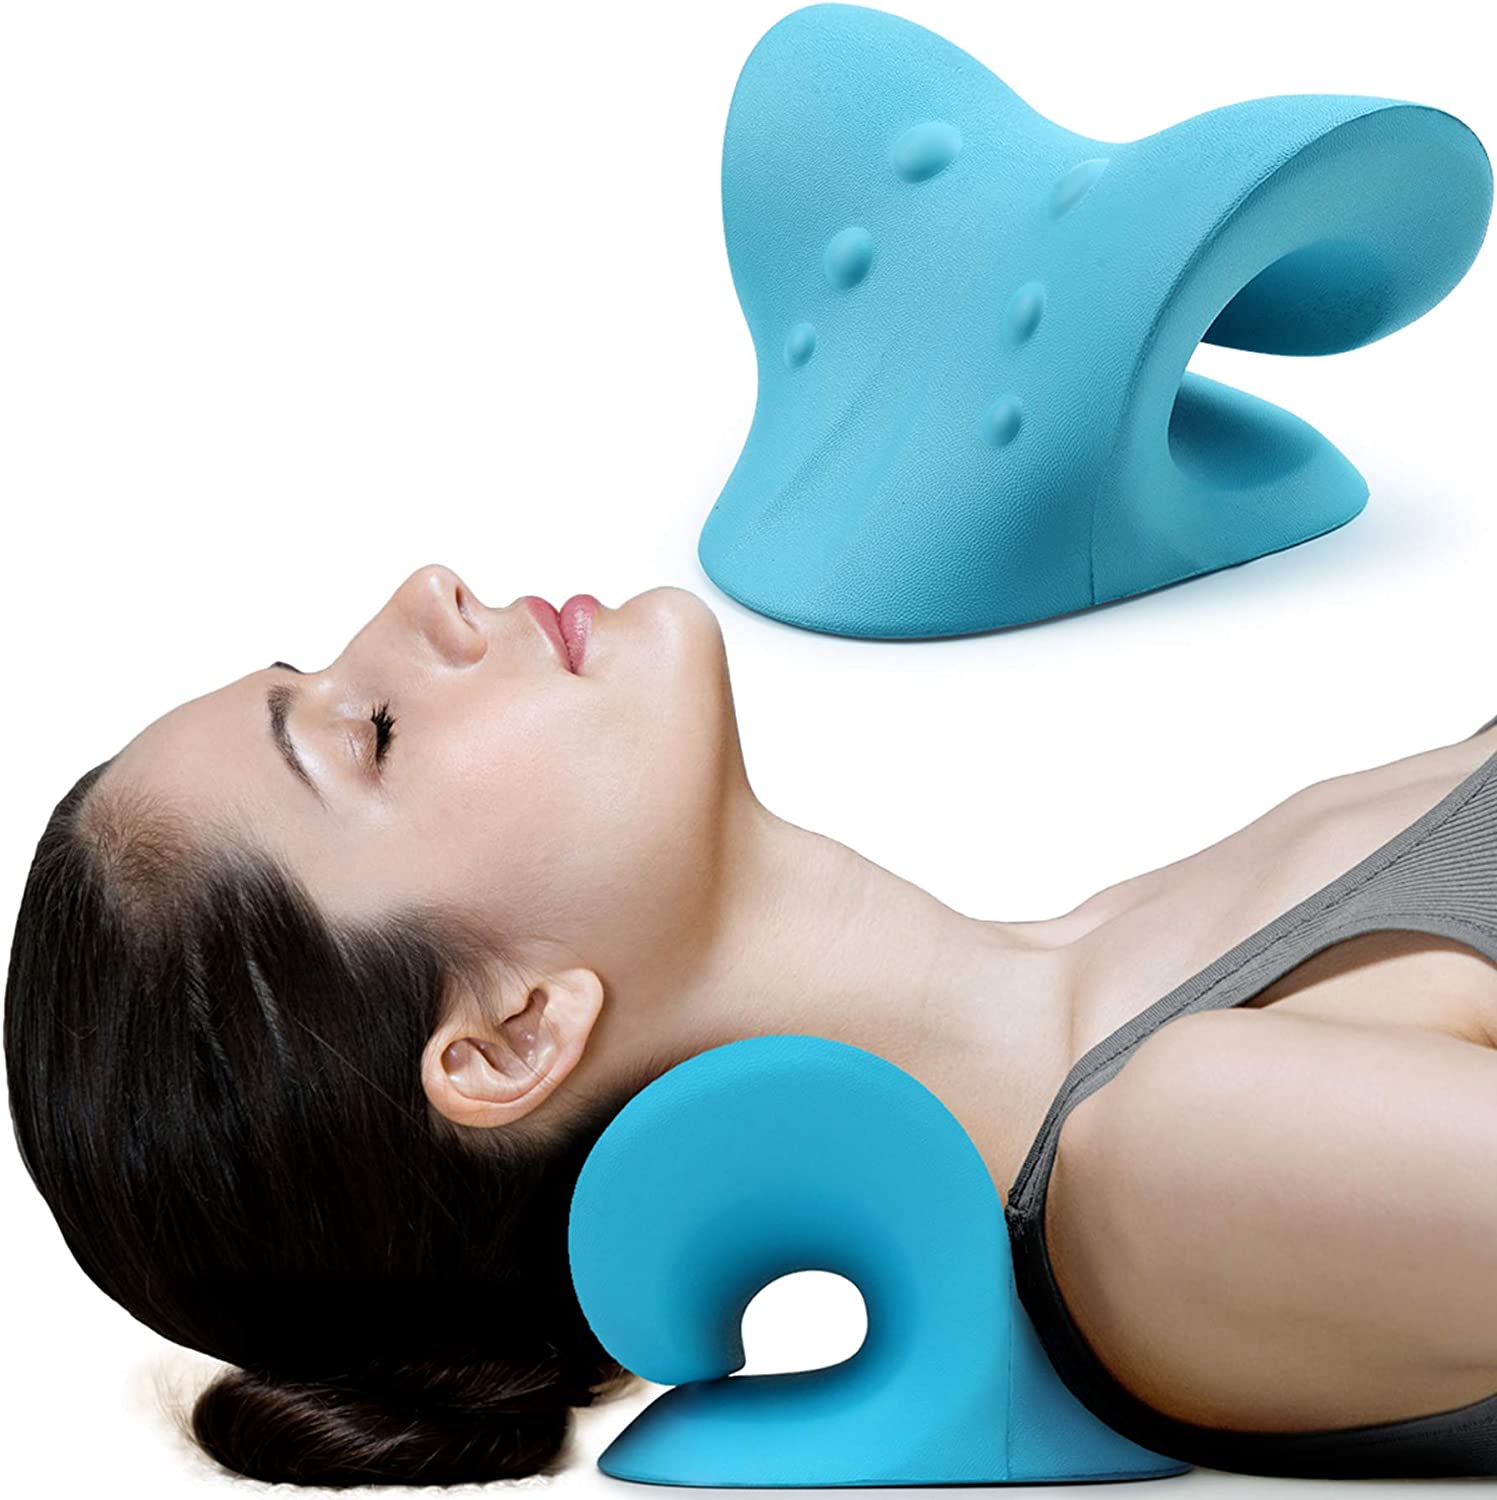 shoulder and neck massage in use